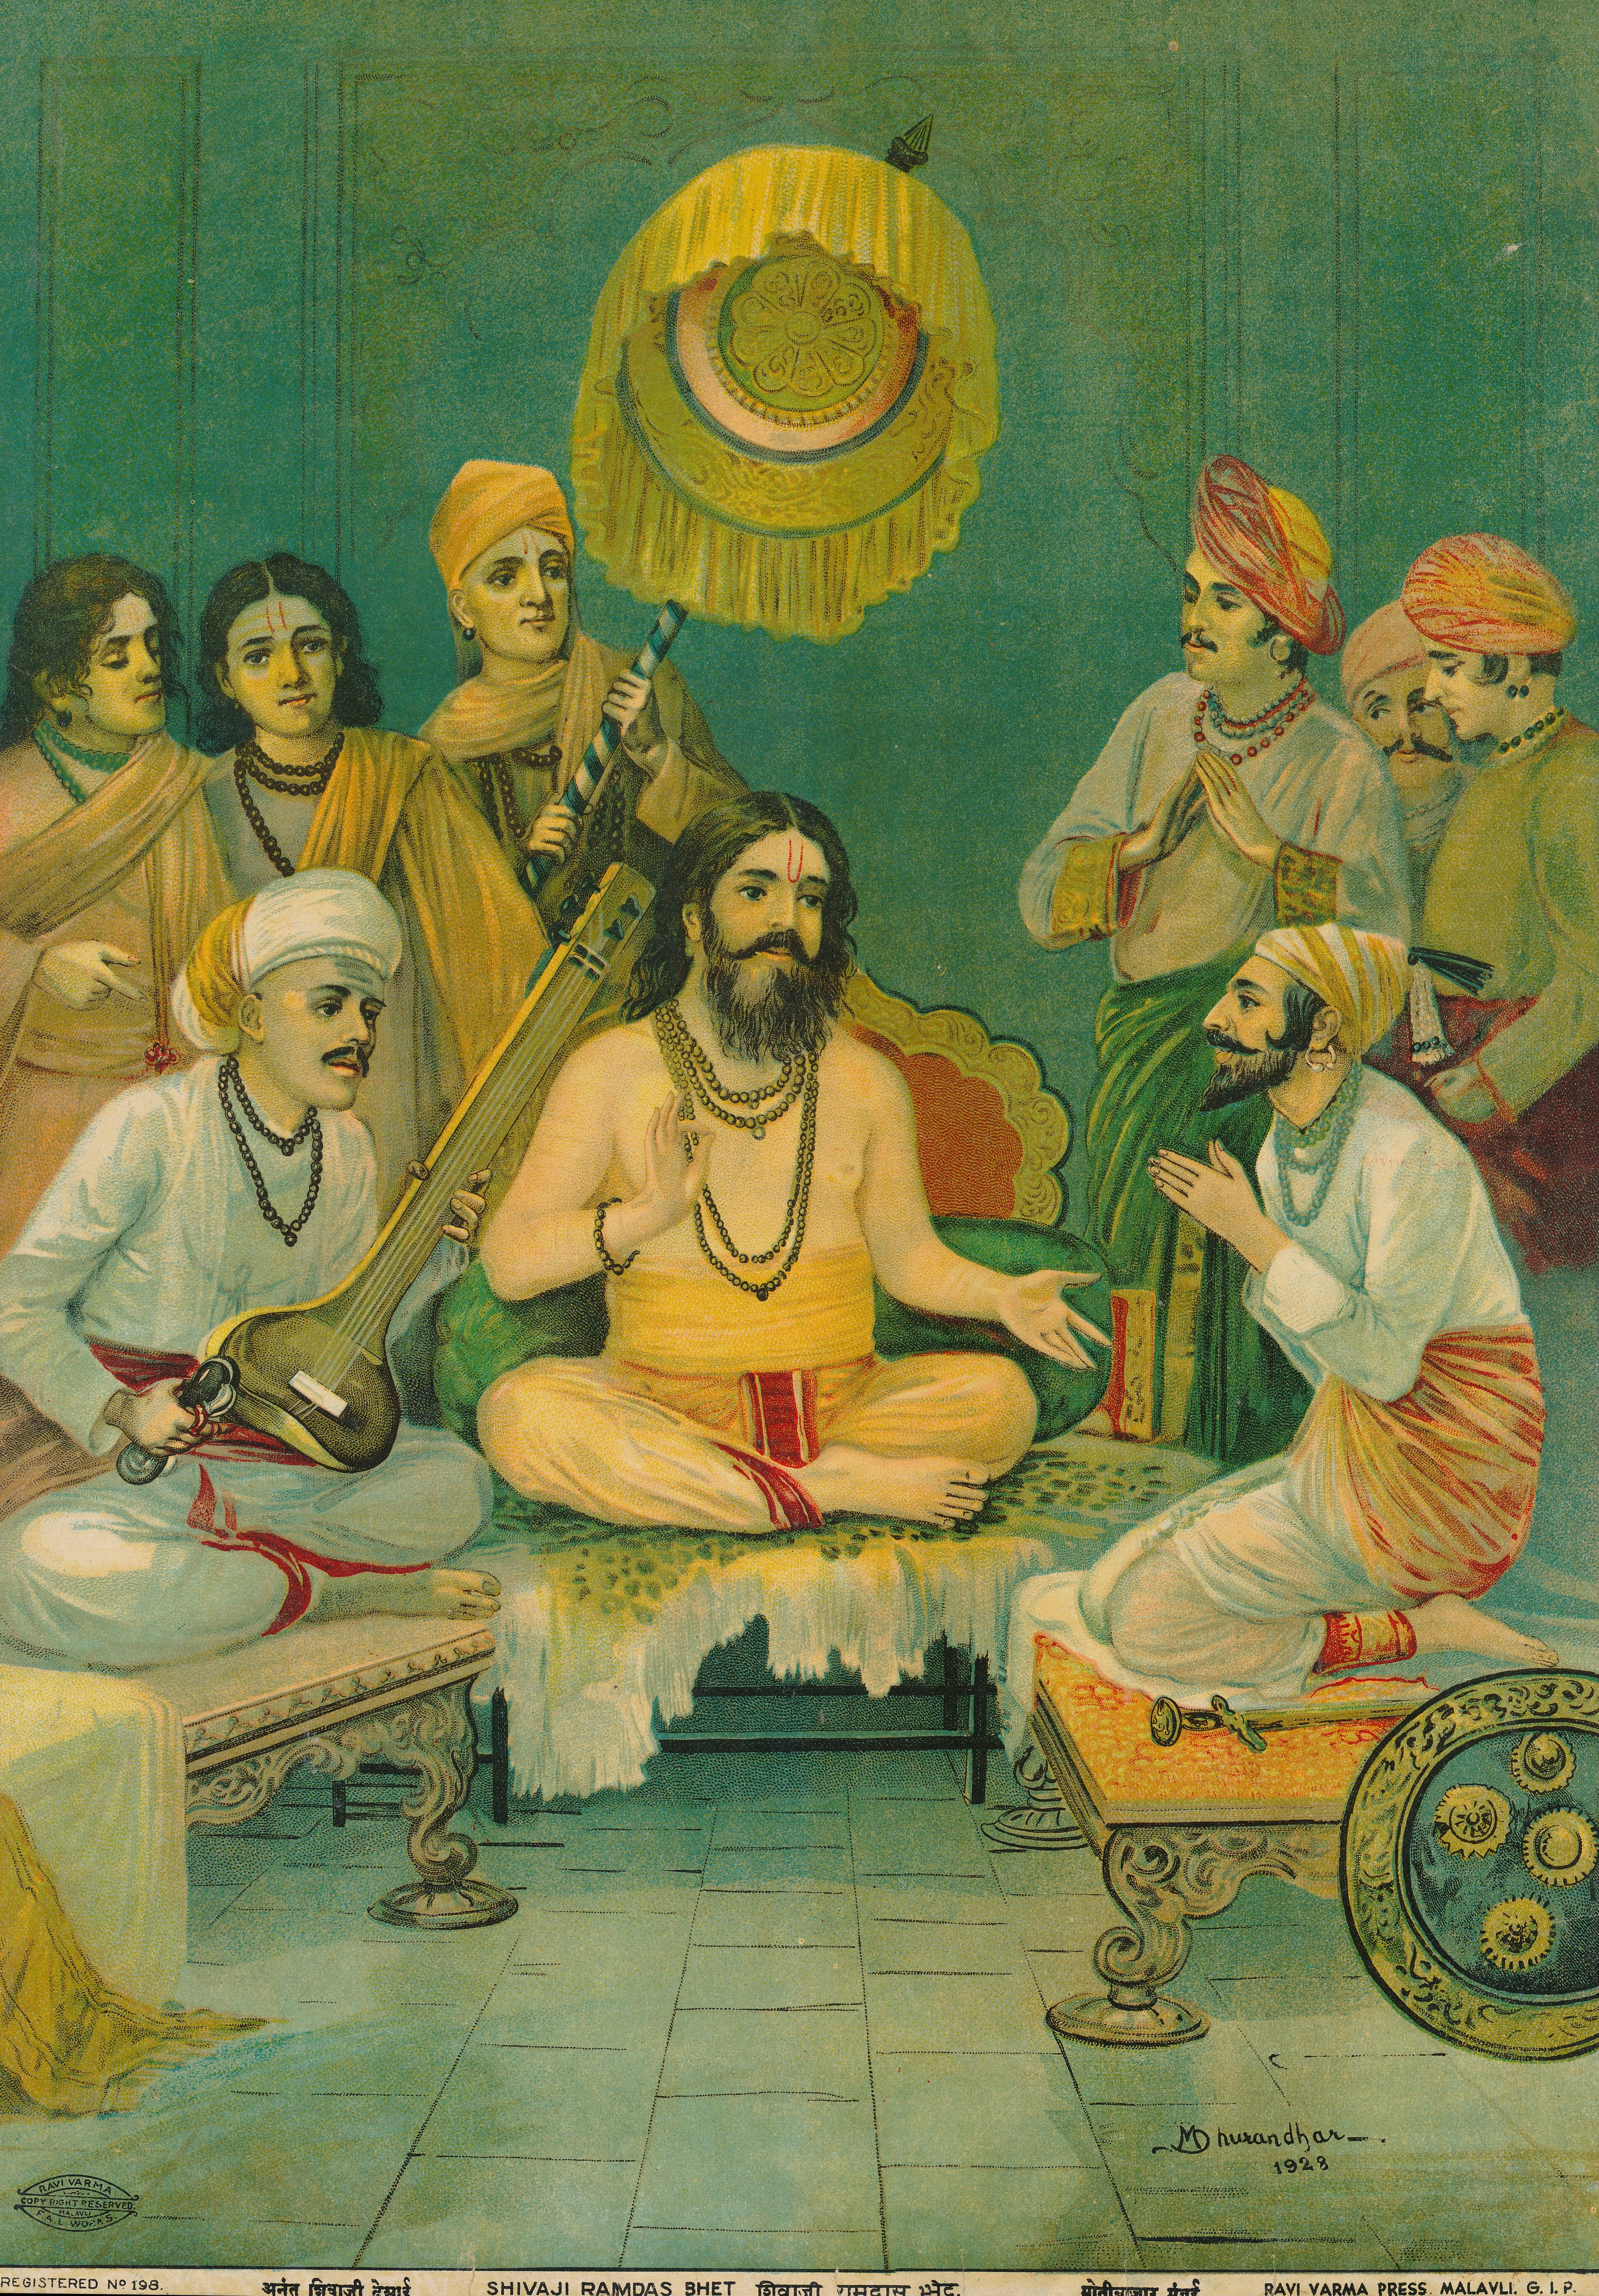 Shivaji in audience with his guru, Ramdas.